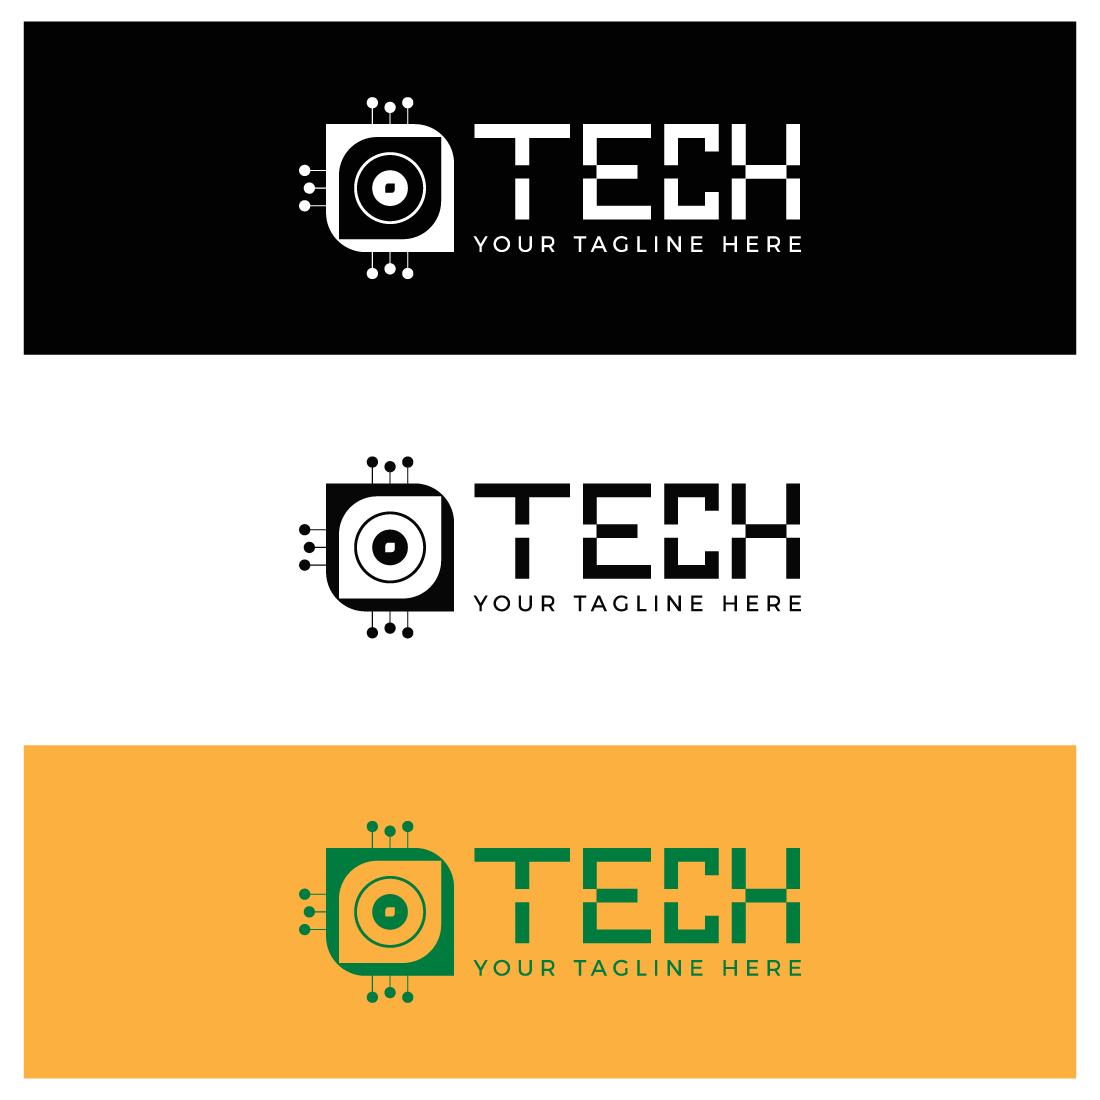 Technology based logo design cover image.